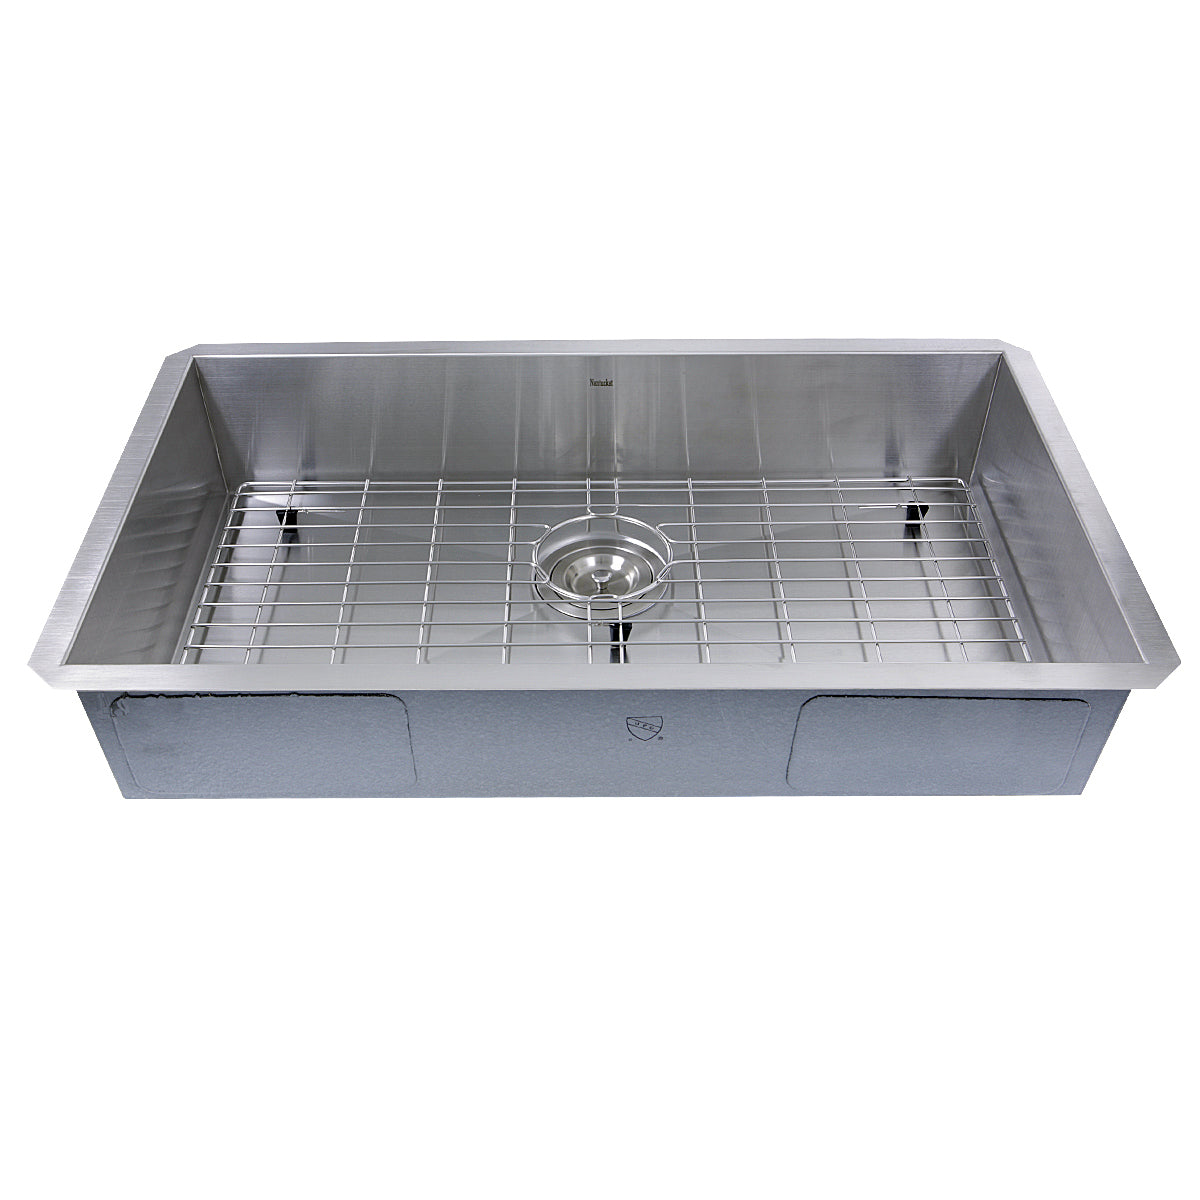 Nantucket Sinks 30-inch Single Bowl Zero Radius ADA Stainless Steel Kitchen Sink